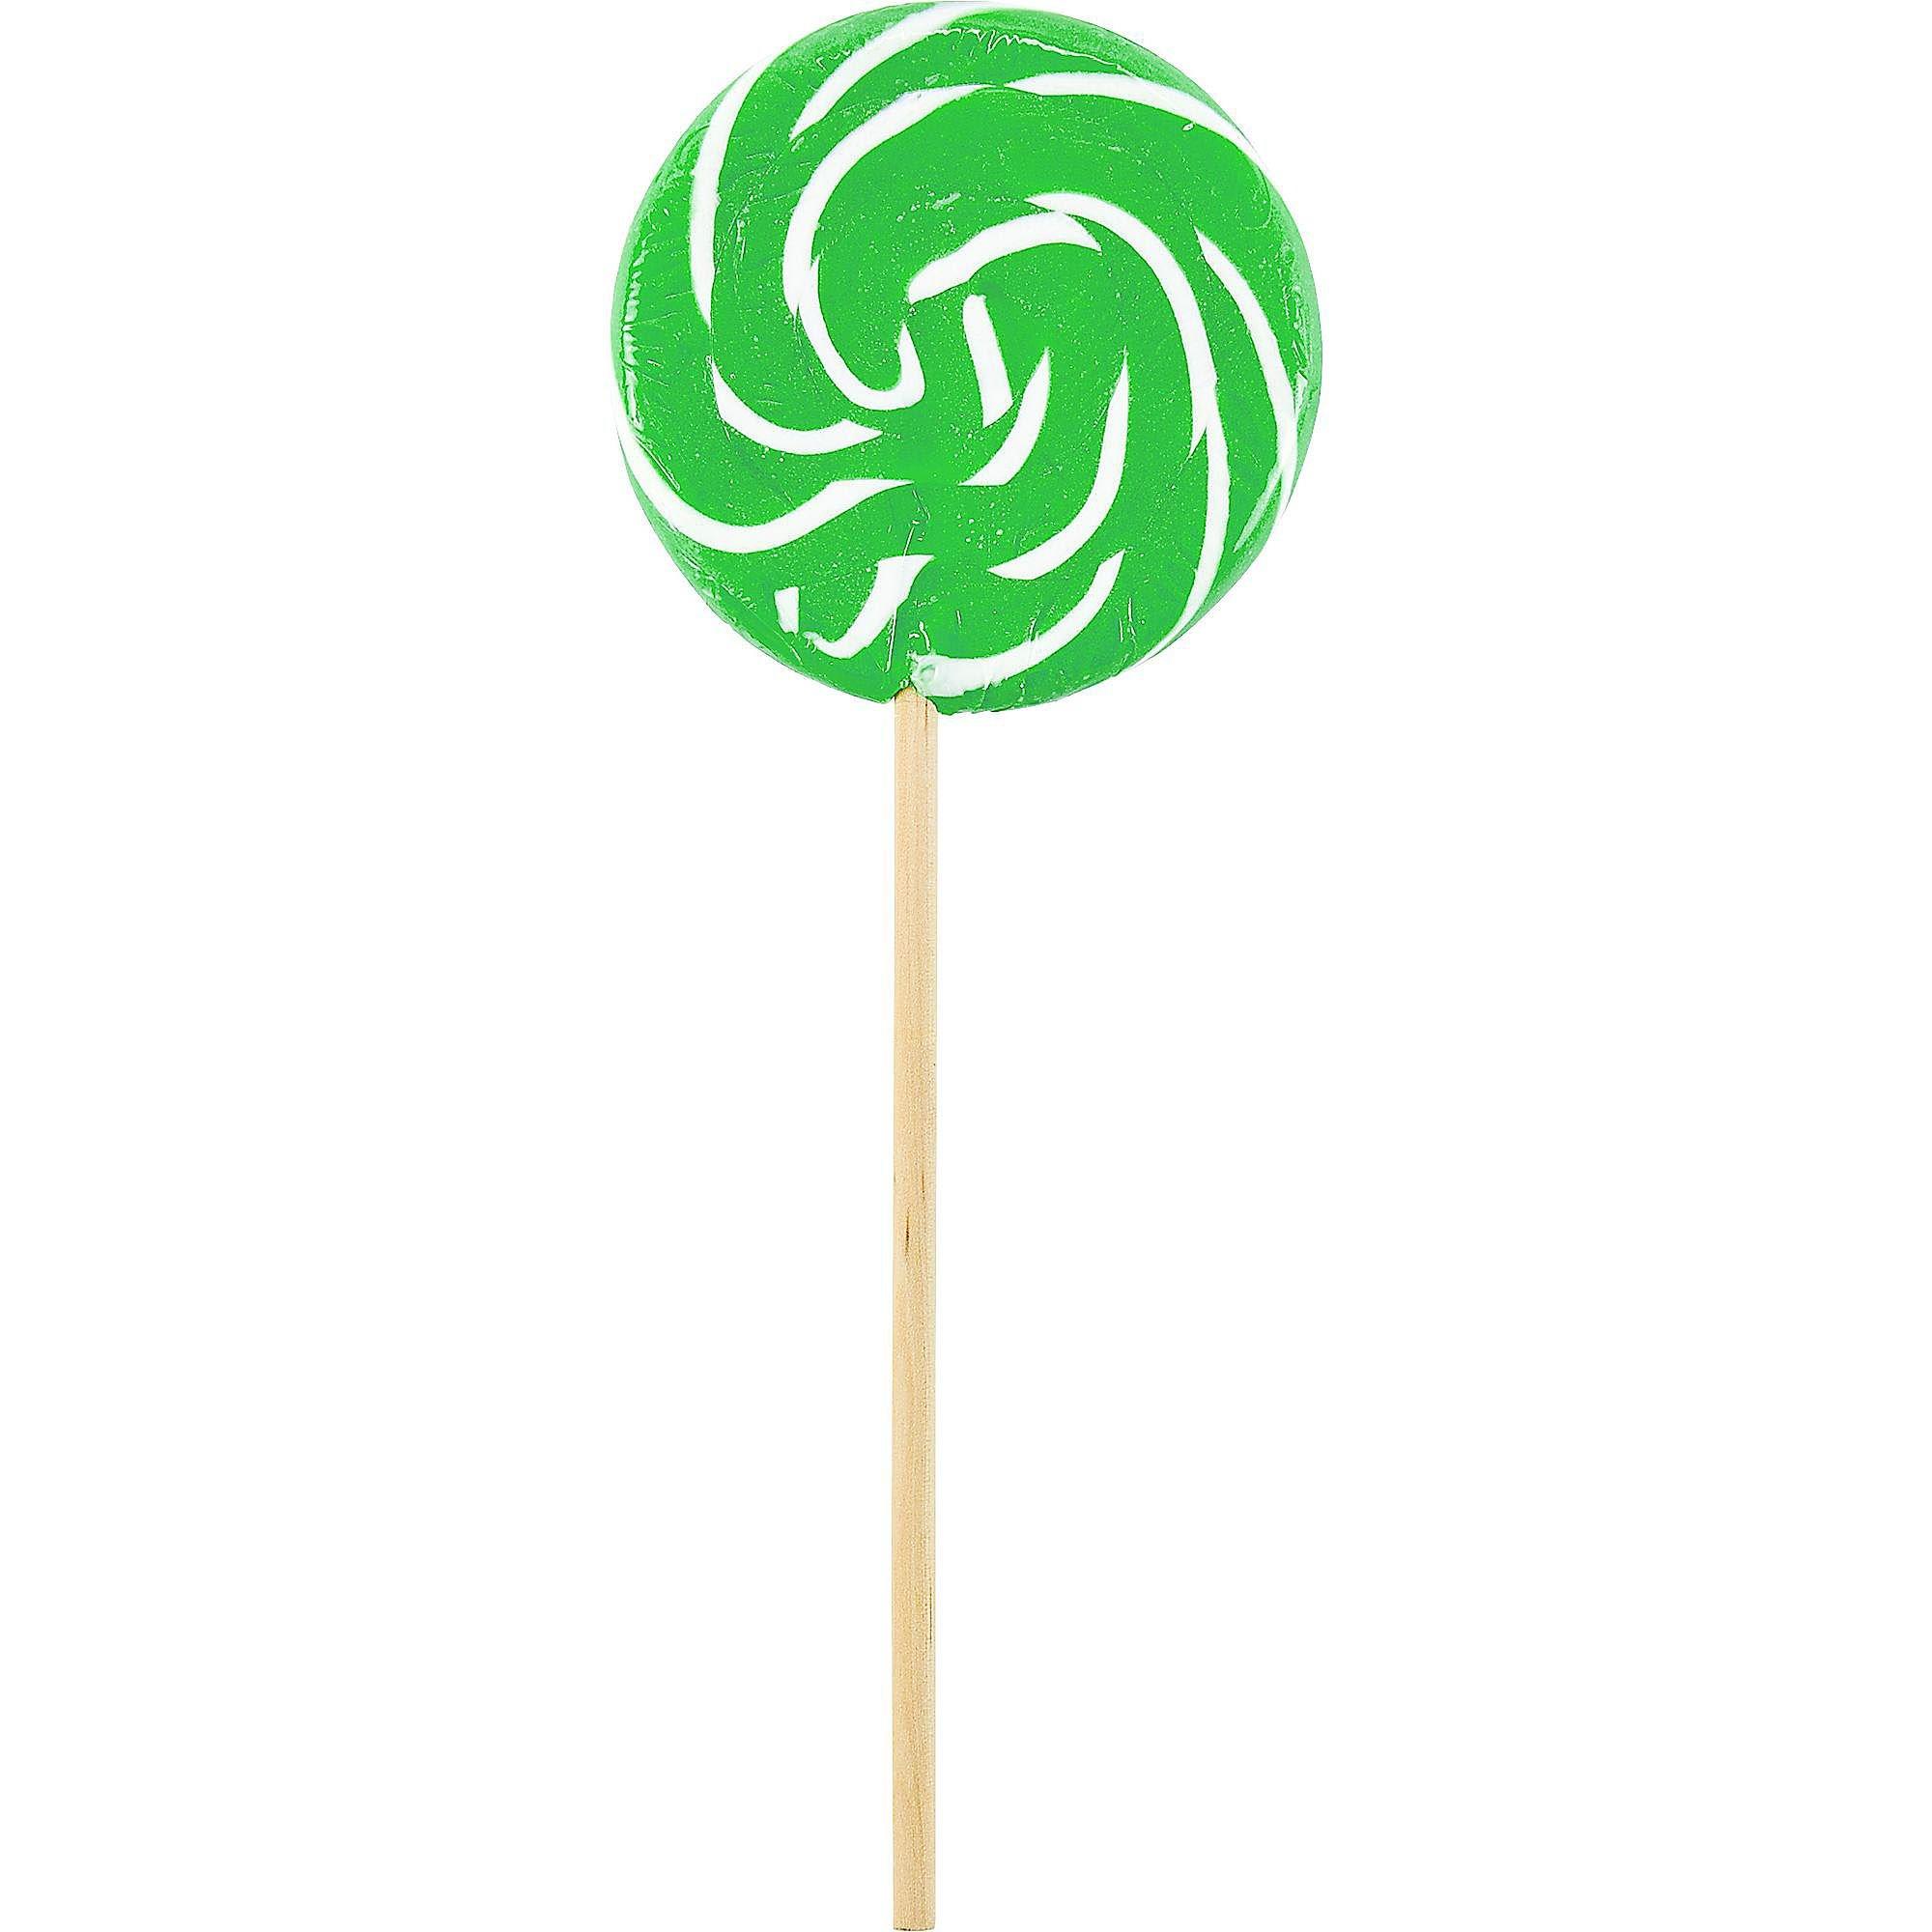 Green Swirl Lollipops with Clear Plastic Sticks – YumJunkie